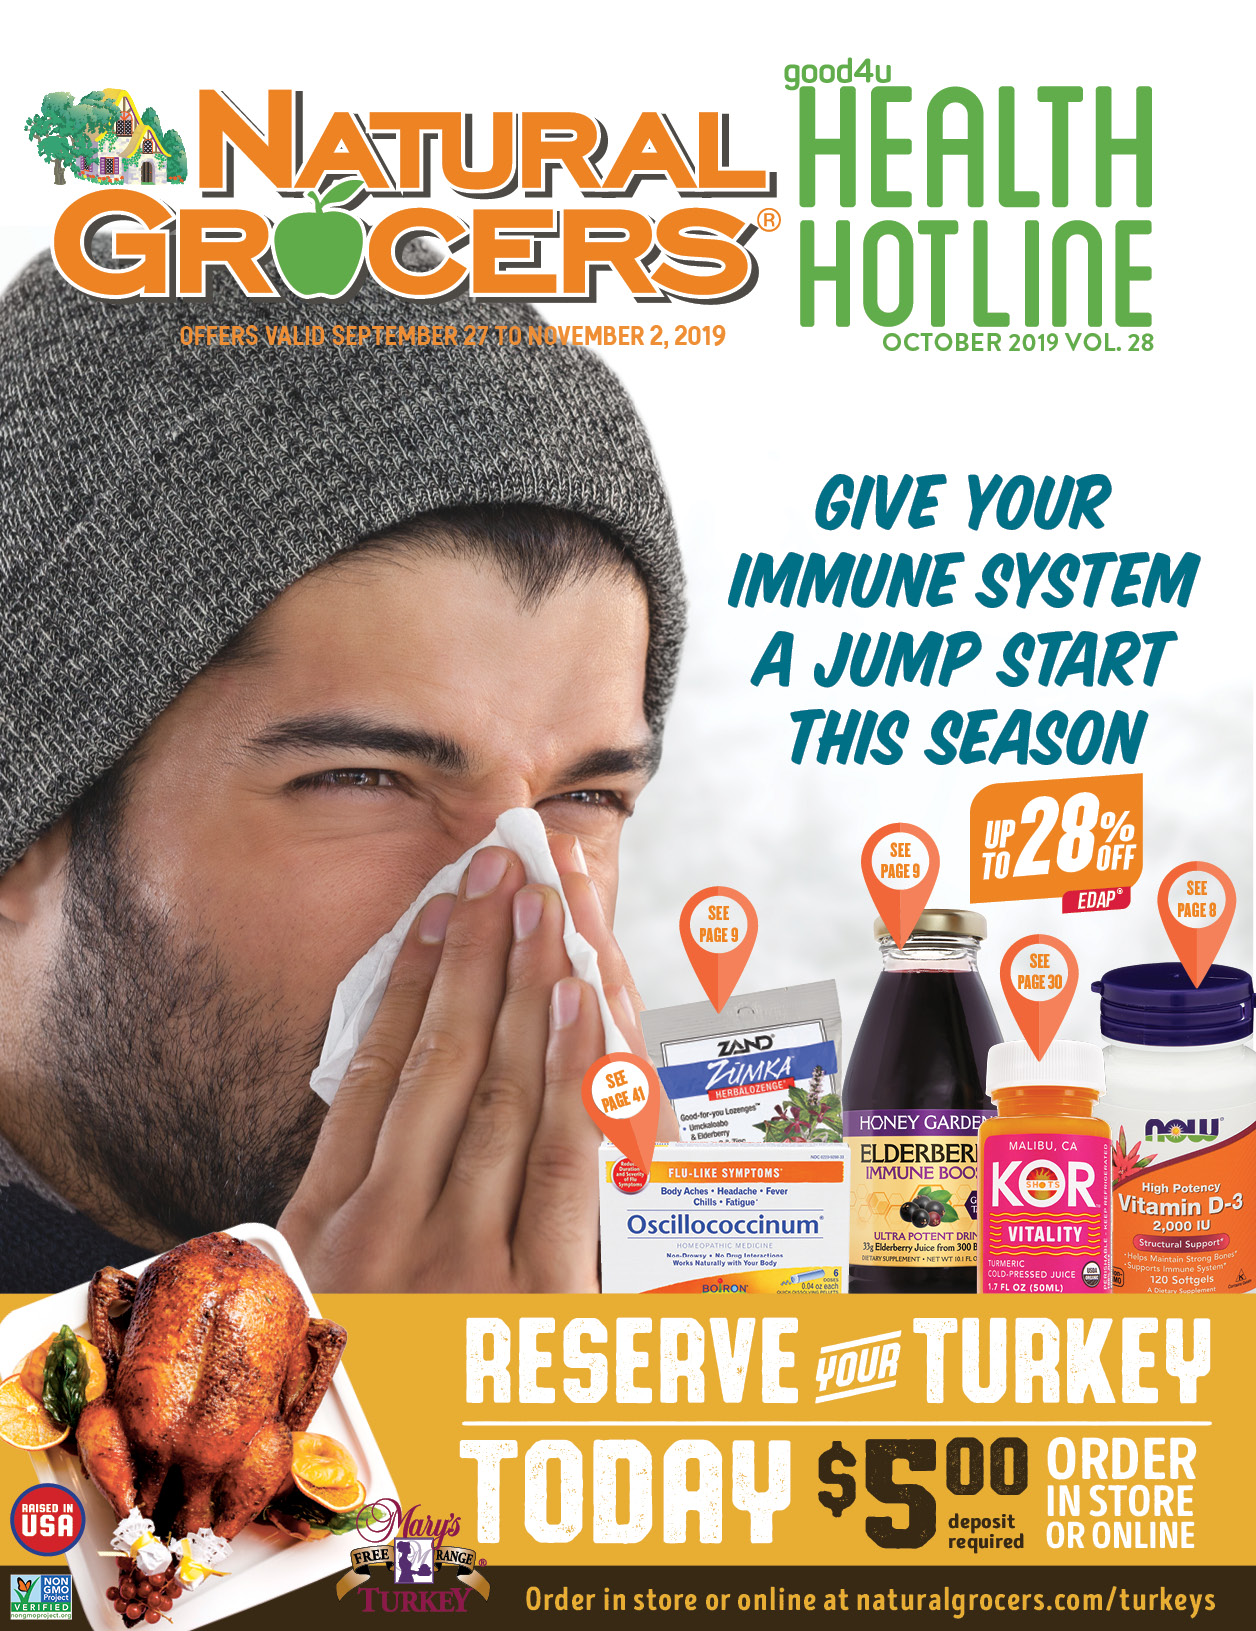 good4u Health Hotline Magazine | Natural Grocers